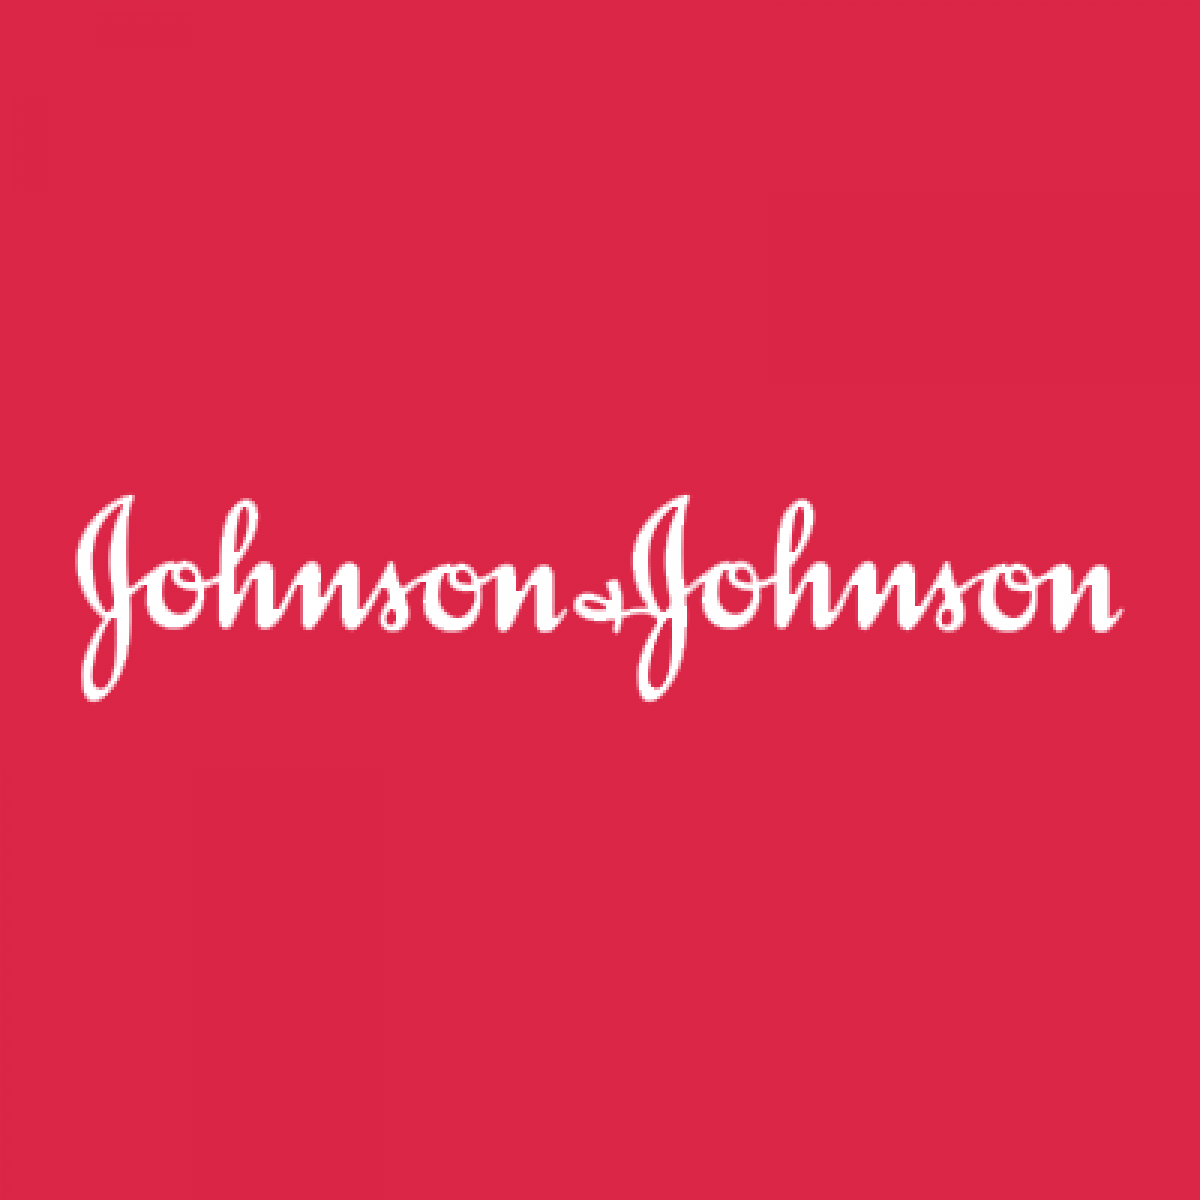 Johnson & Johnson - Mollejuo AR Studio